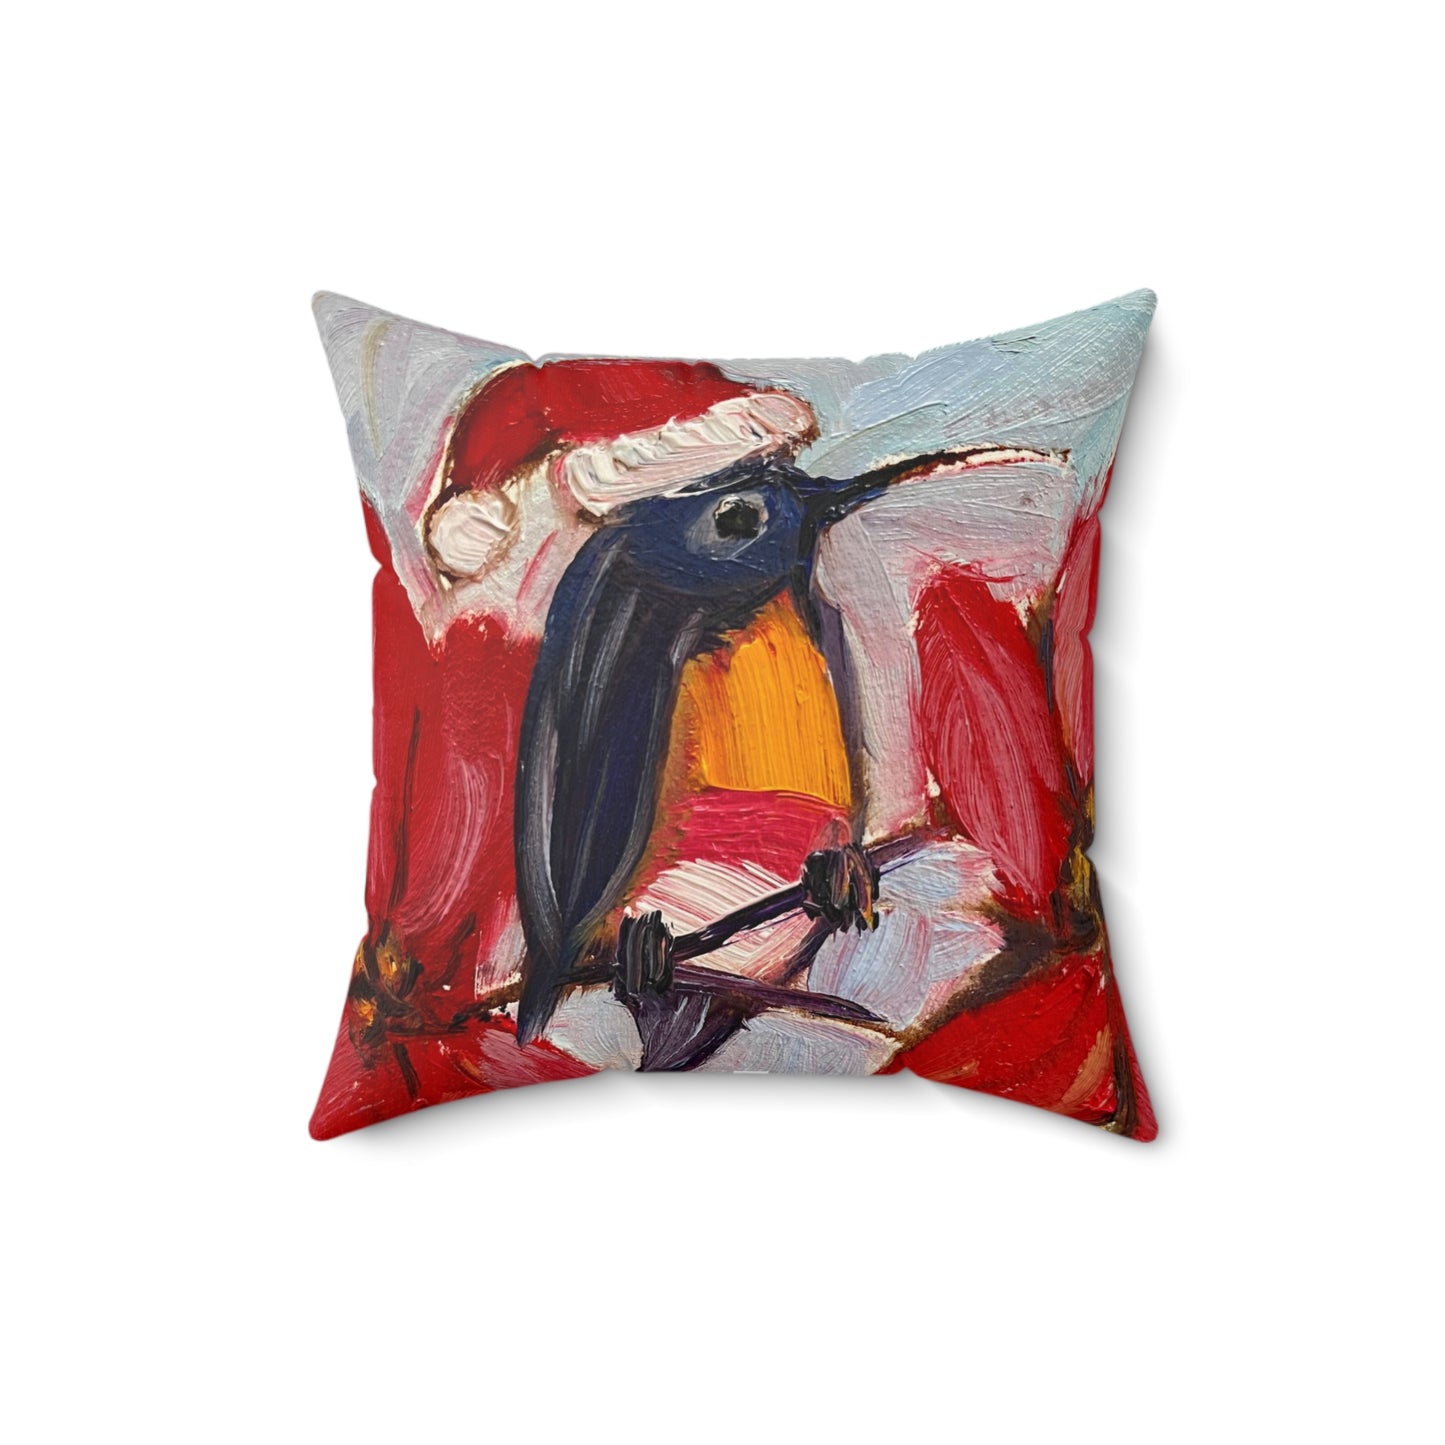 Holiday Hummingbird (Hummingbird with Poinsettias) Indoor Spun Polyester Square Pillow